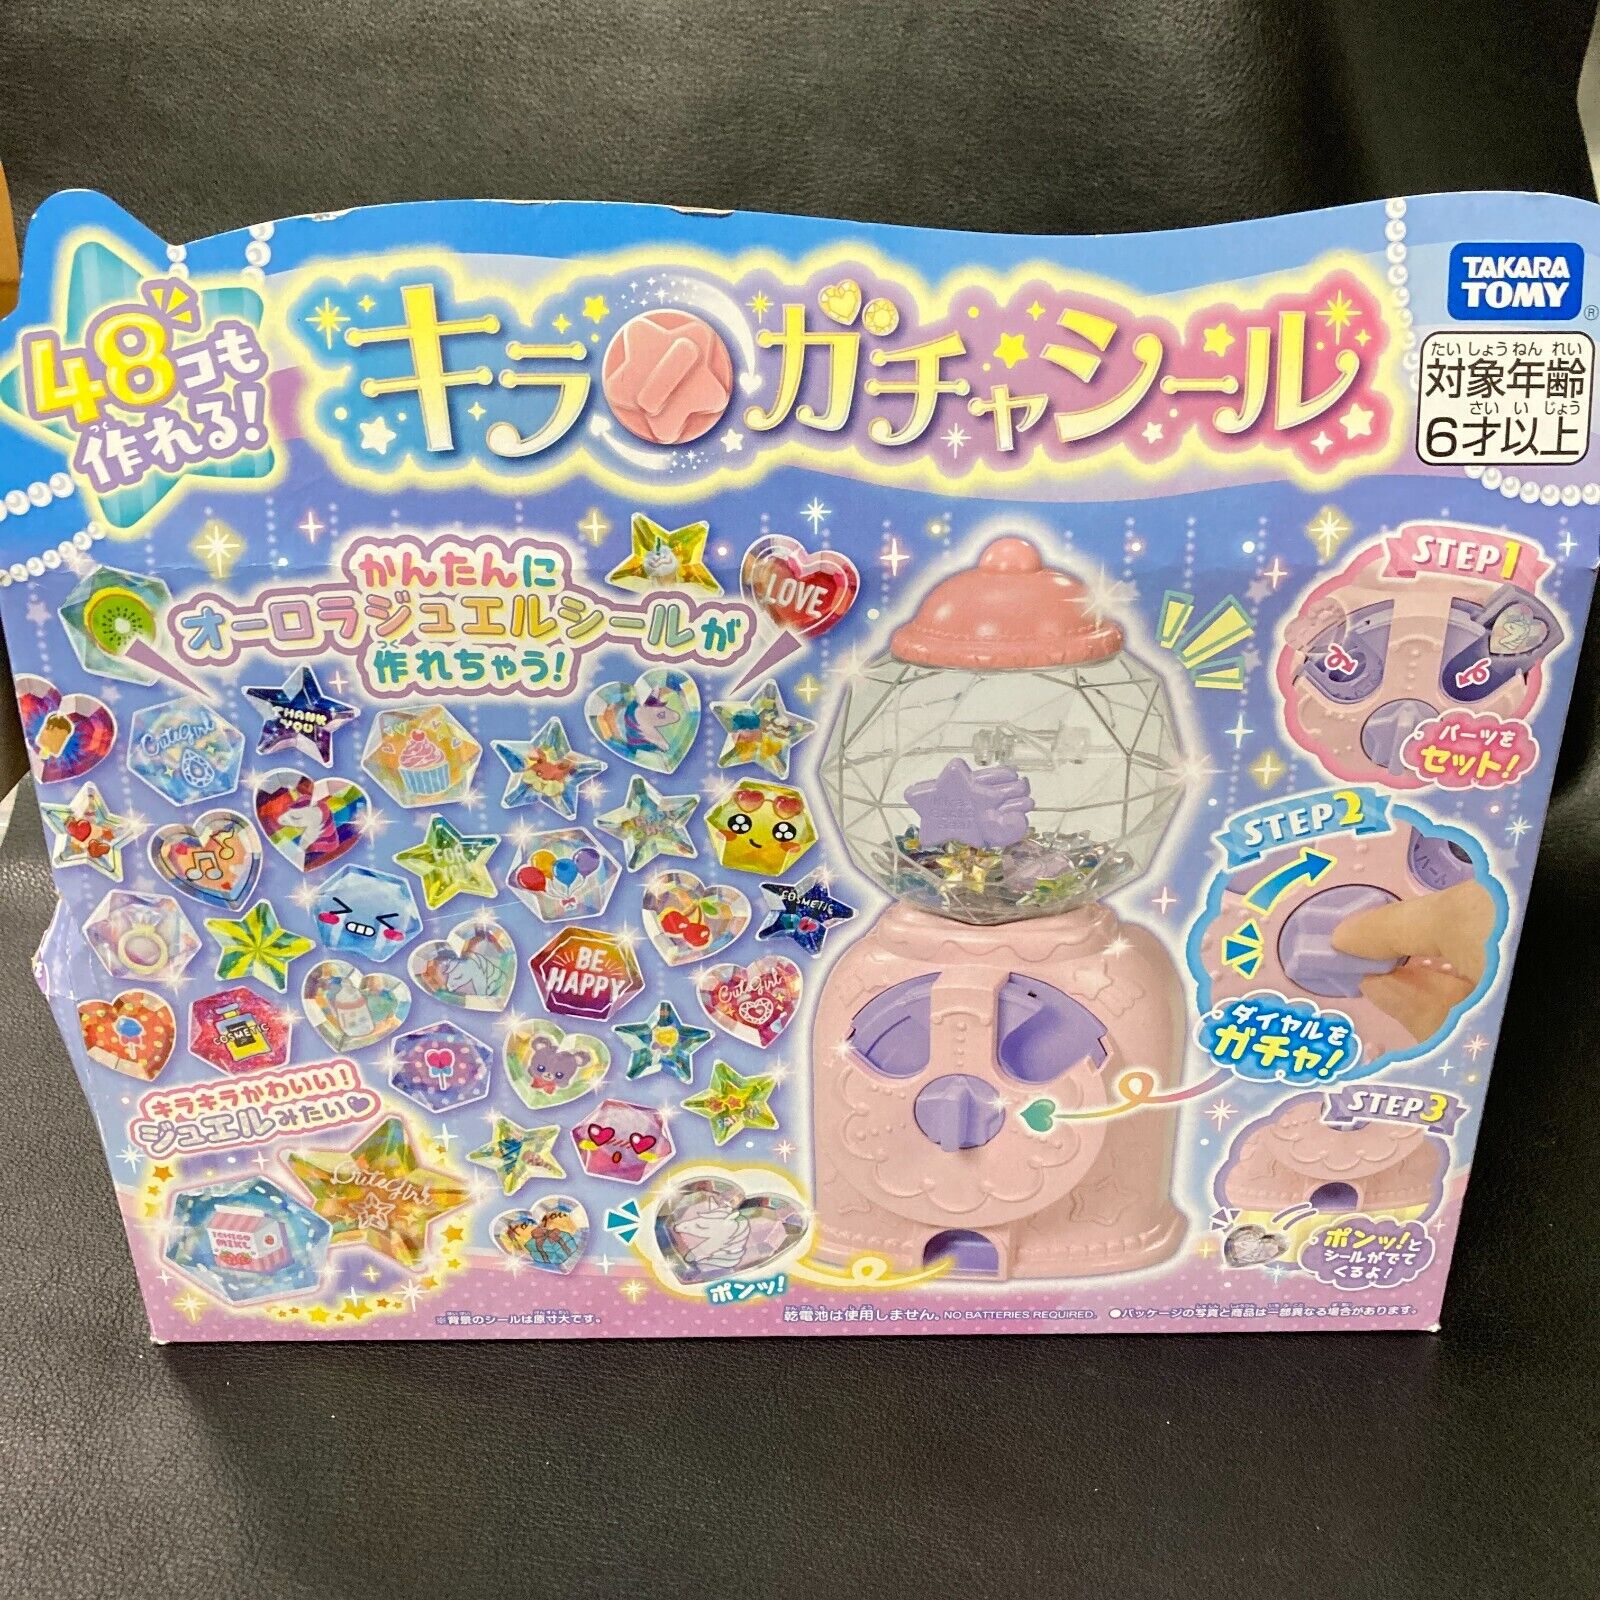 KIra Gacha Seal TAKARA TOMY Not Used Toy Box Damaged very cute japan gachagacha